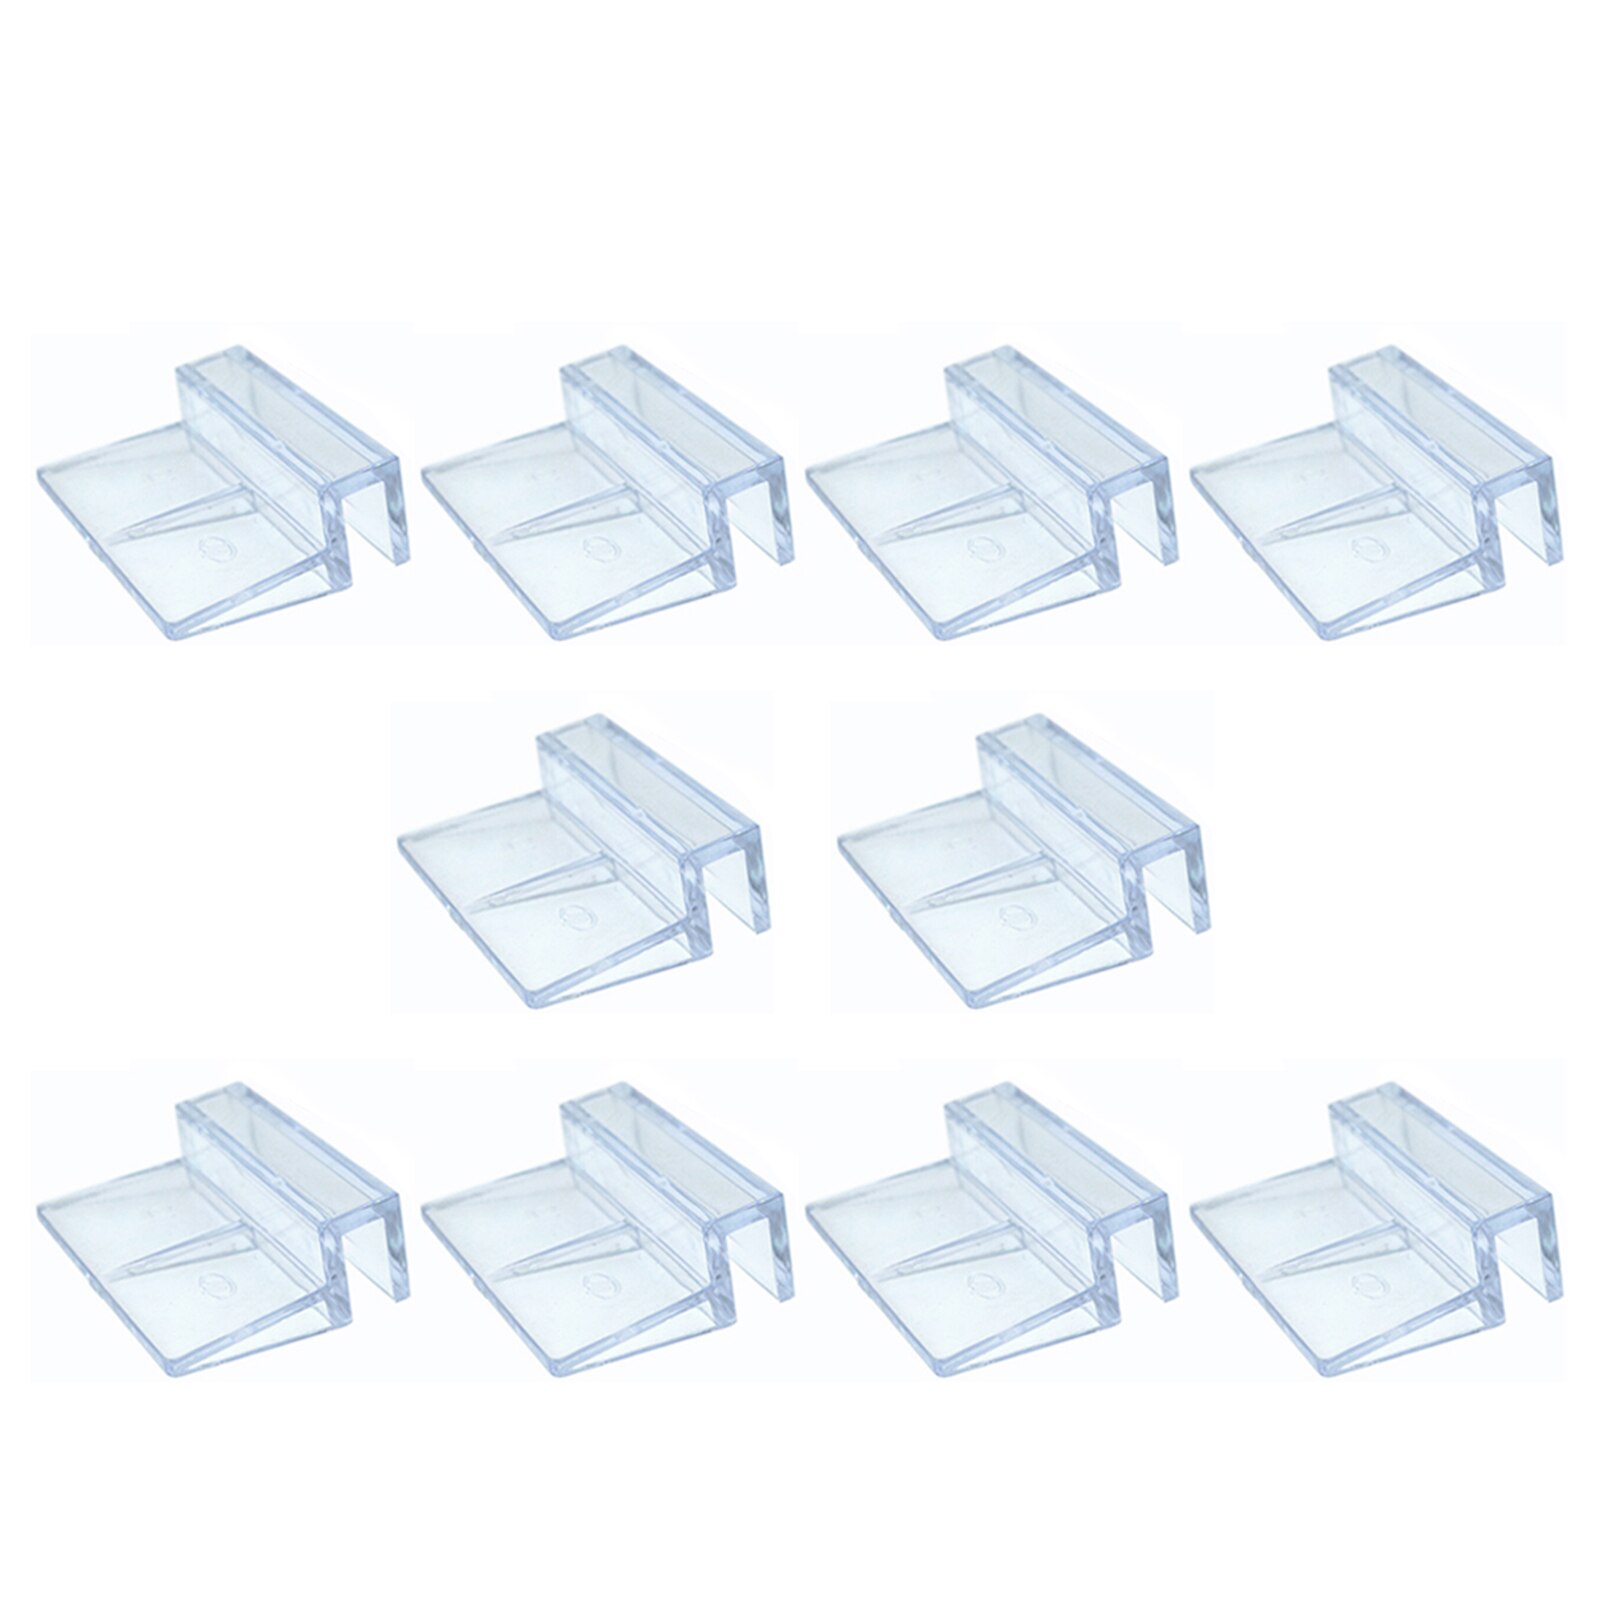 10 stk stativ glasdæksel klipsholder holder akvarium akryl kæledyrsforsyning akvarium 6/8/10/12mm klart hjemmetilbehør